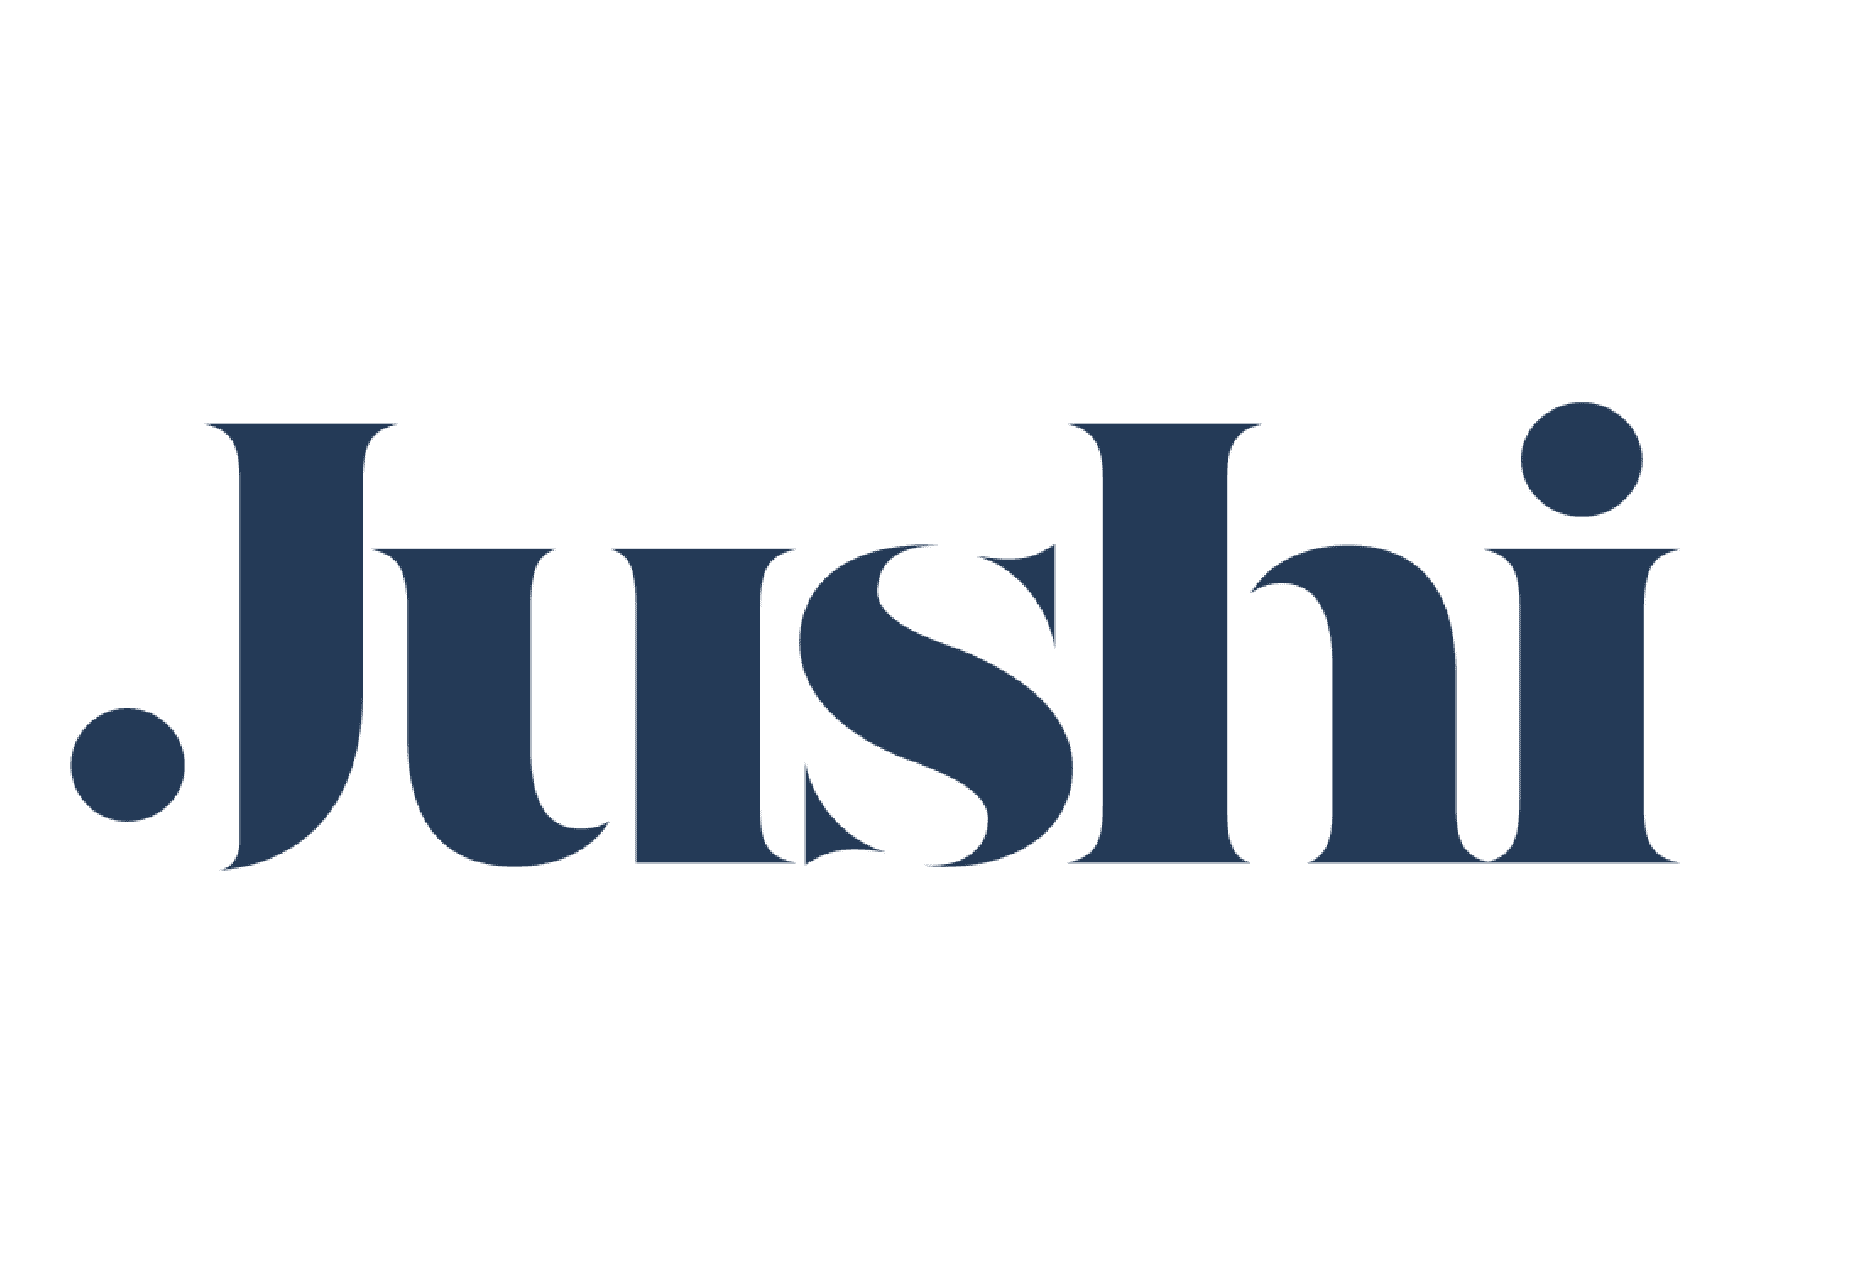 Jushi testimonial for Cannabizteam